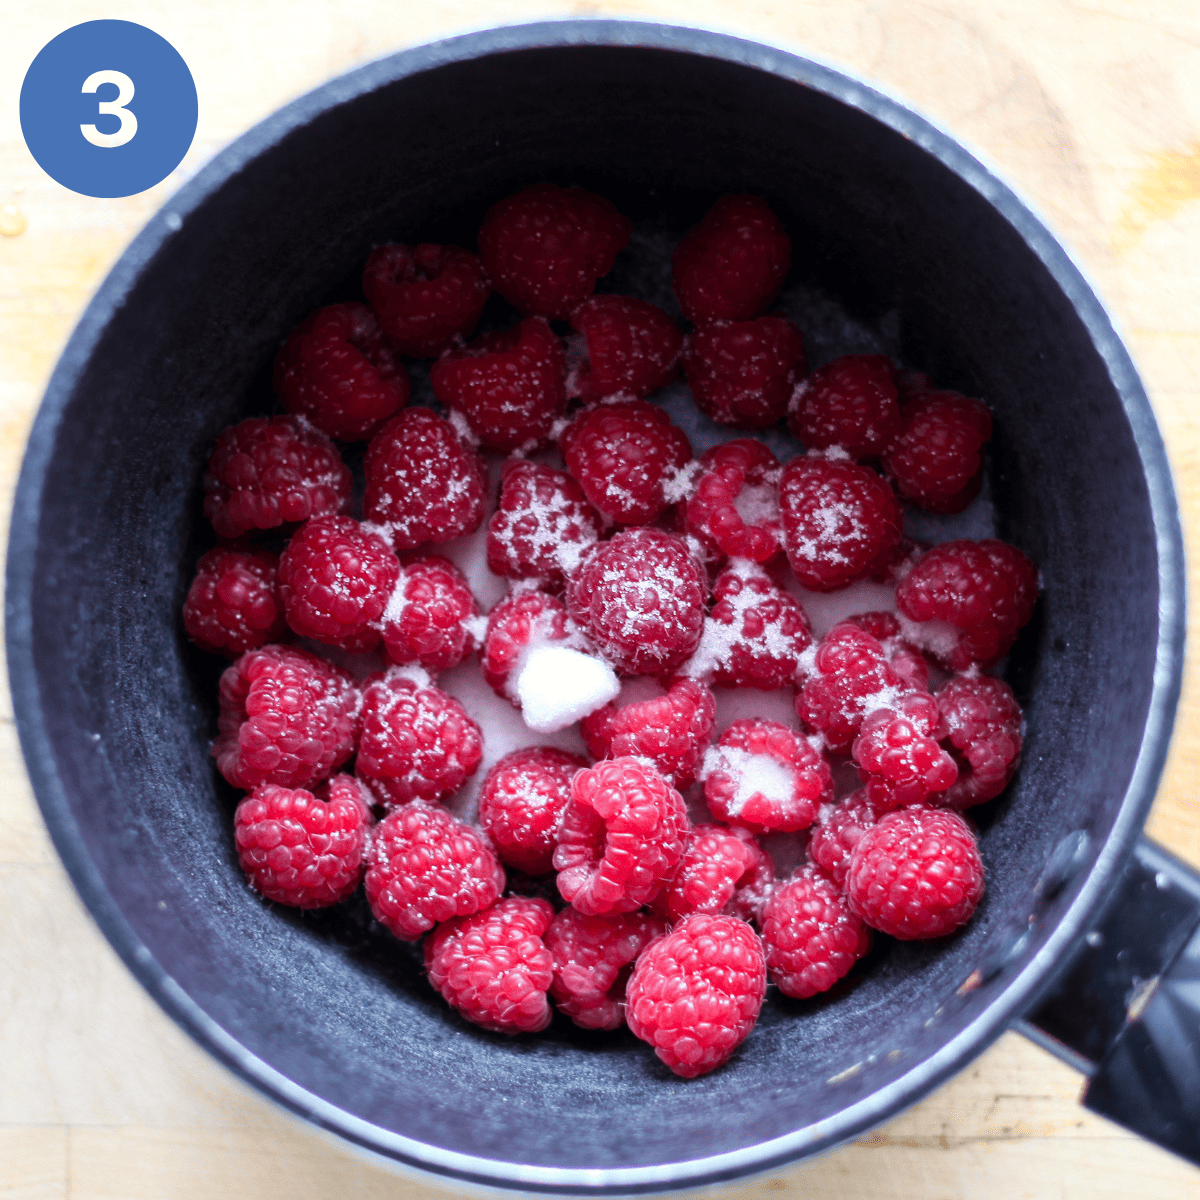 Stewing down raspberries for cranachan.